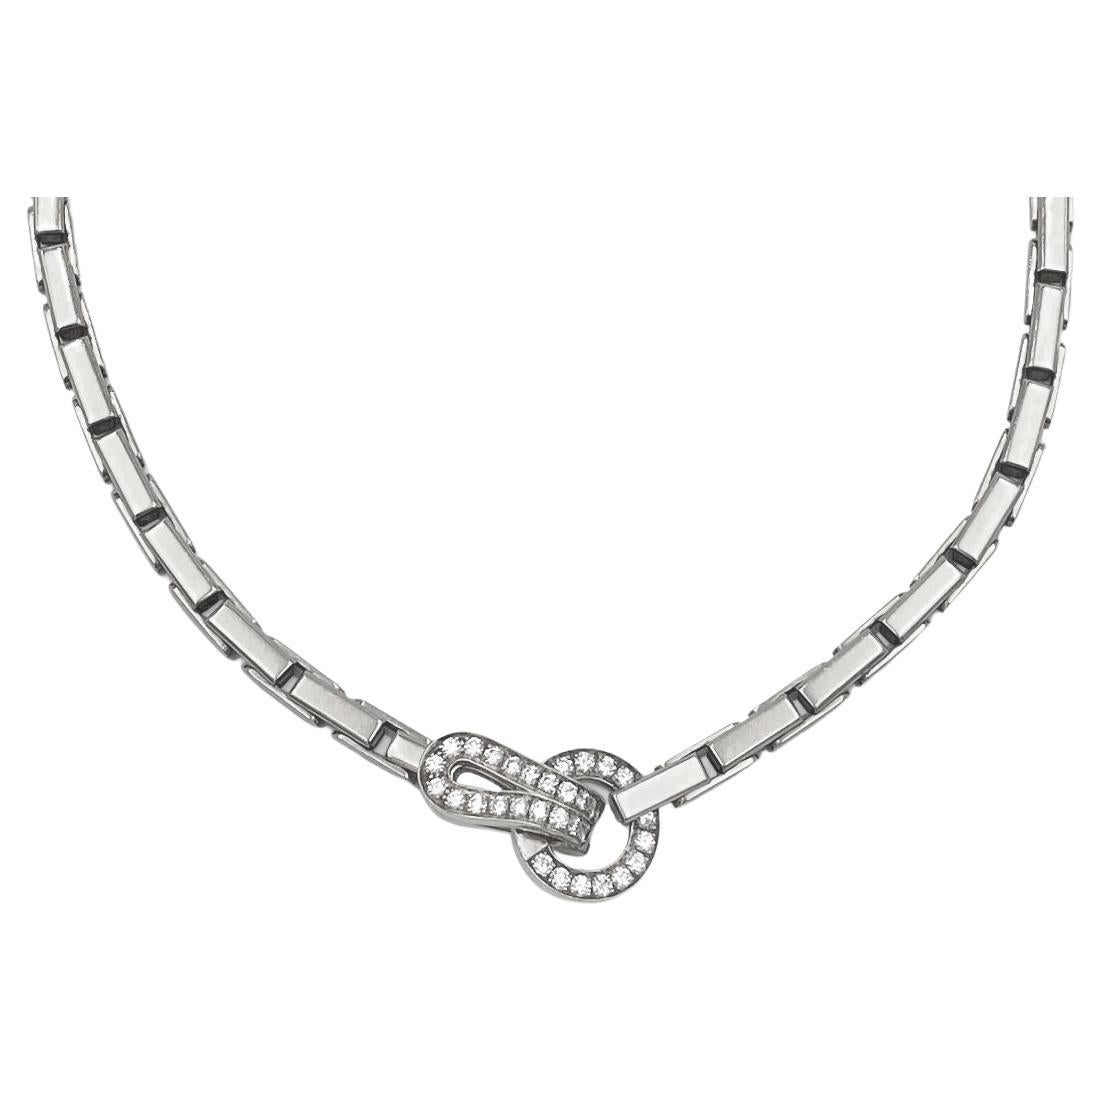 Cartier 18k White Gold Diamond Agrafe Necklace